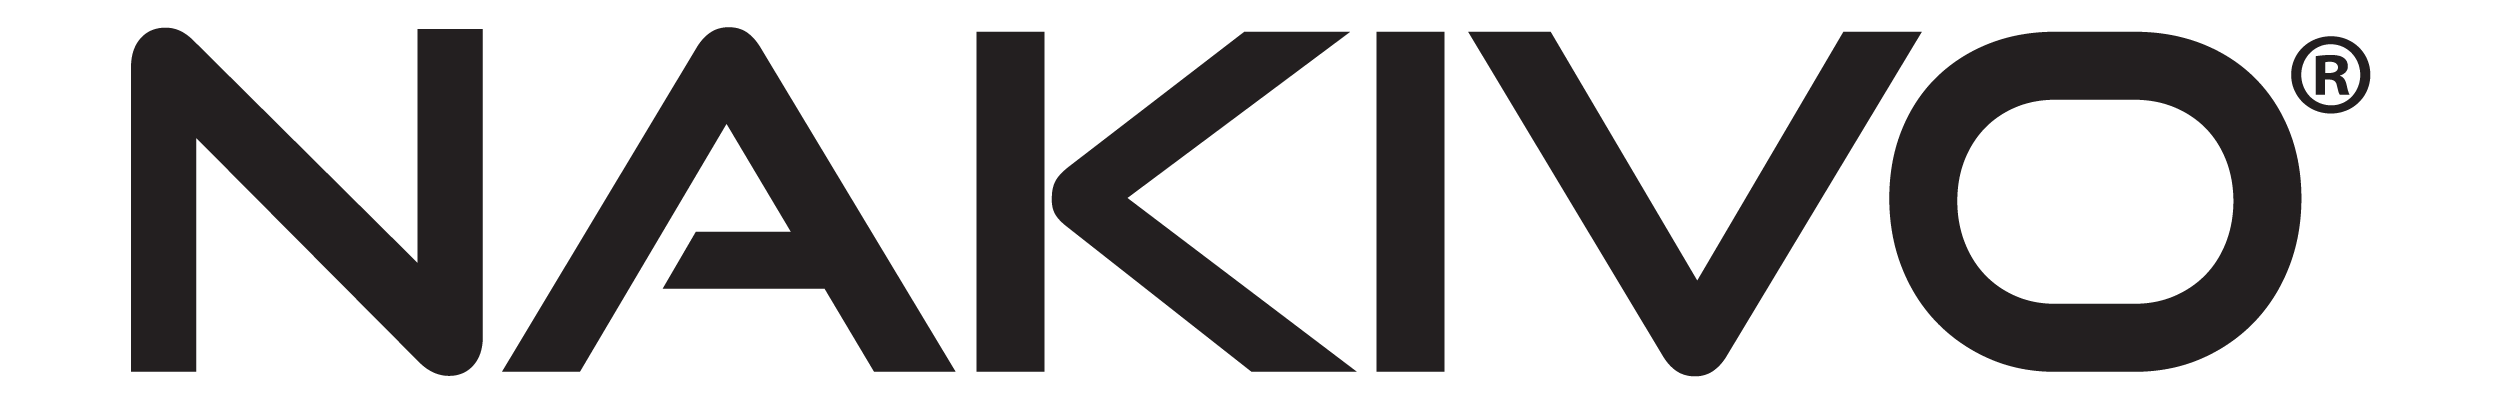 Black Text logo of Nakivo